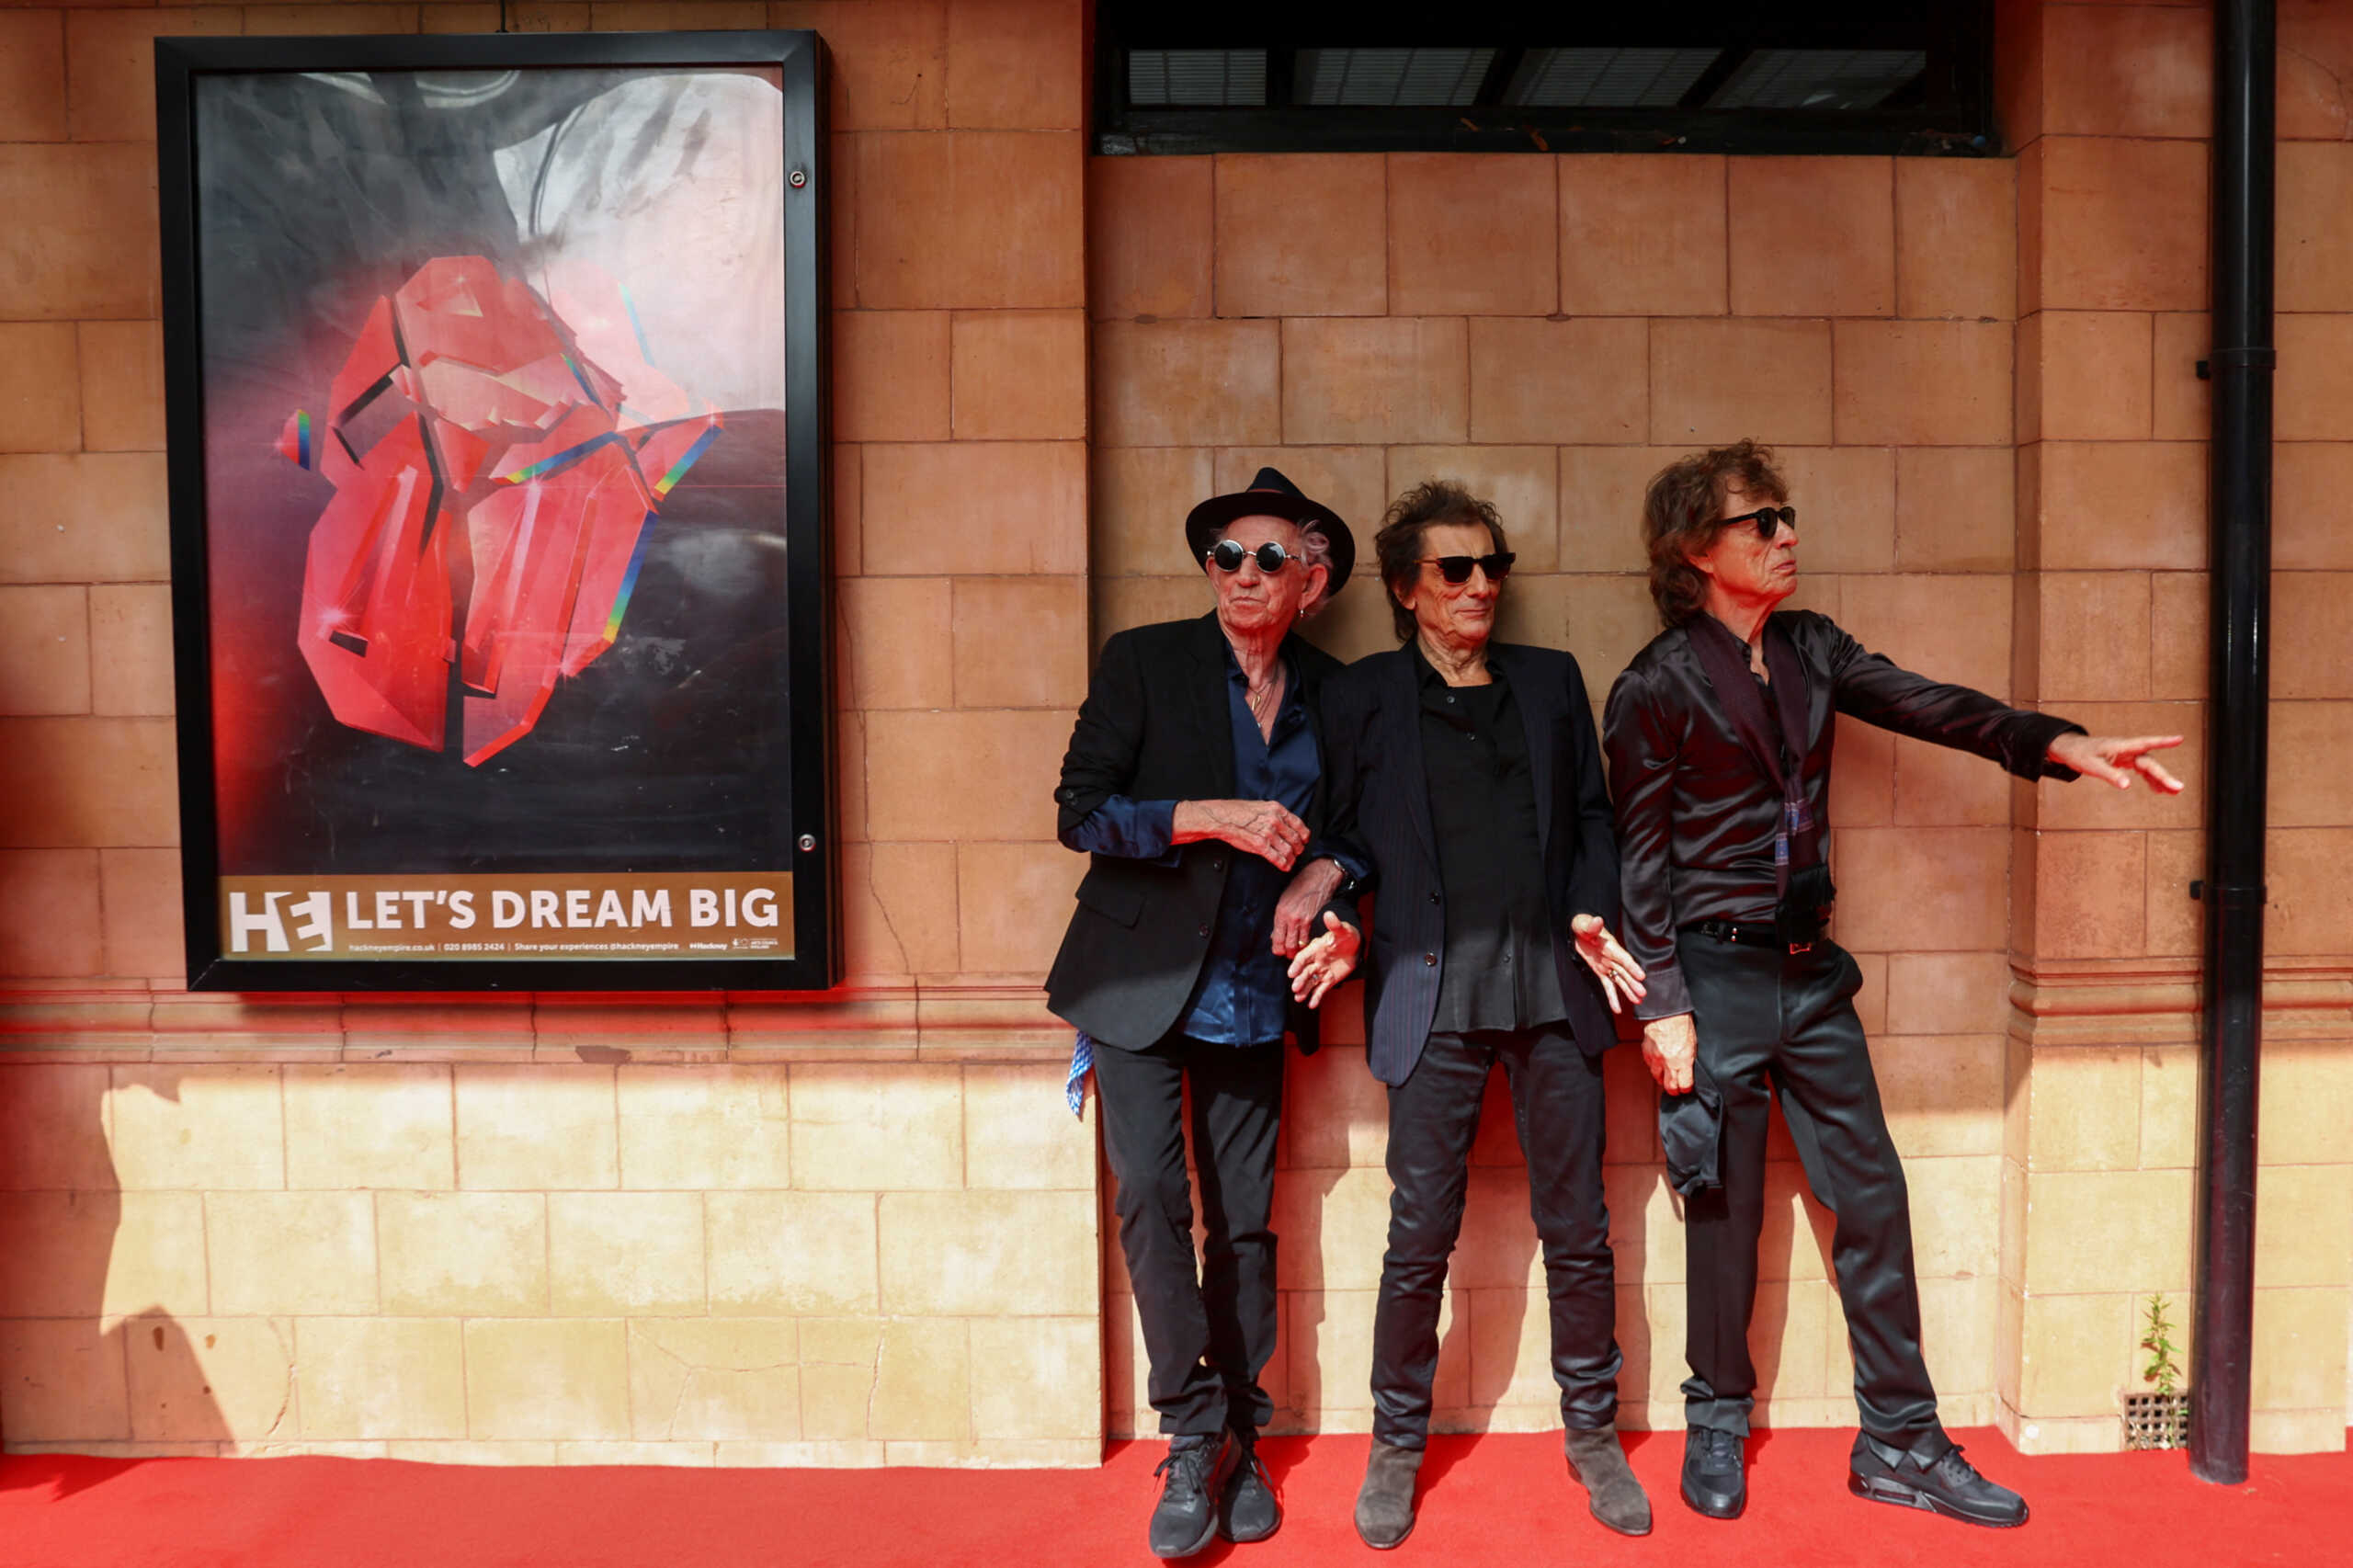 Hackney Diamonds: Οι Rolling Stones έκαναν τα αποκαλυπτήρια του νέου τους άλμπουμ